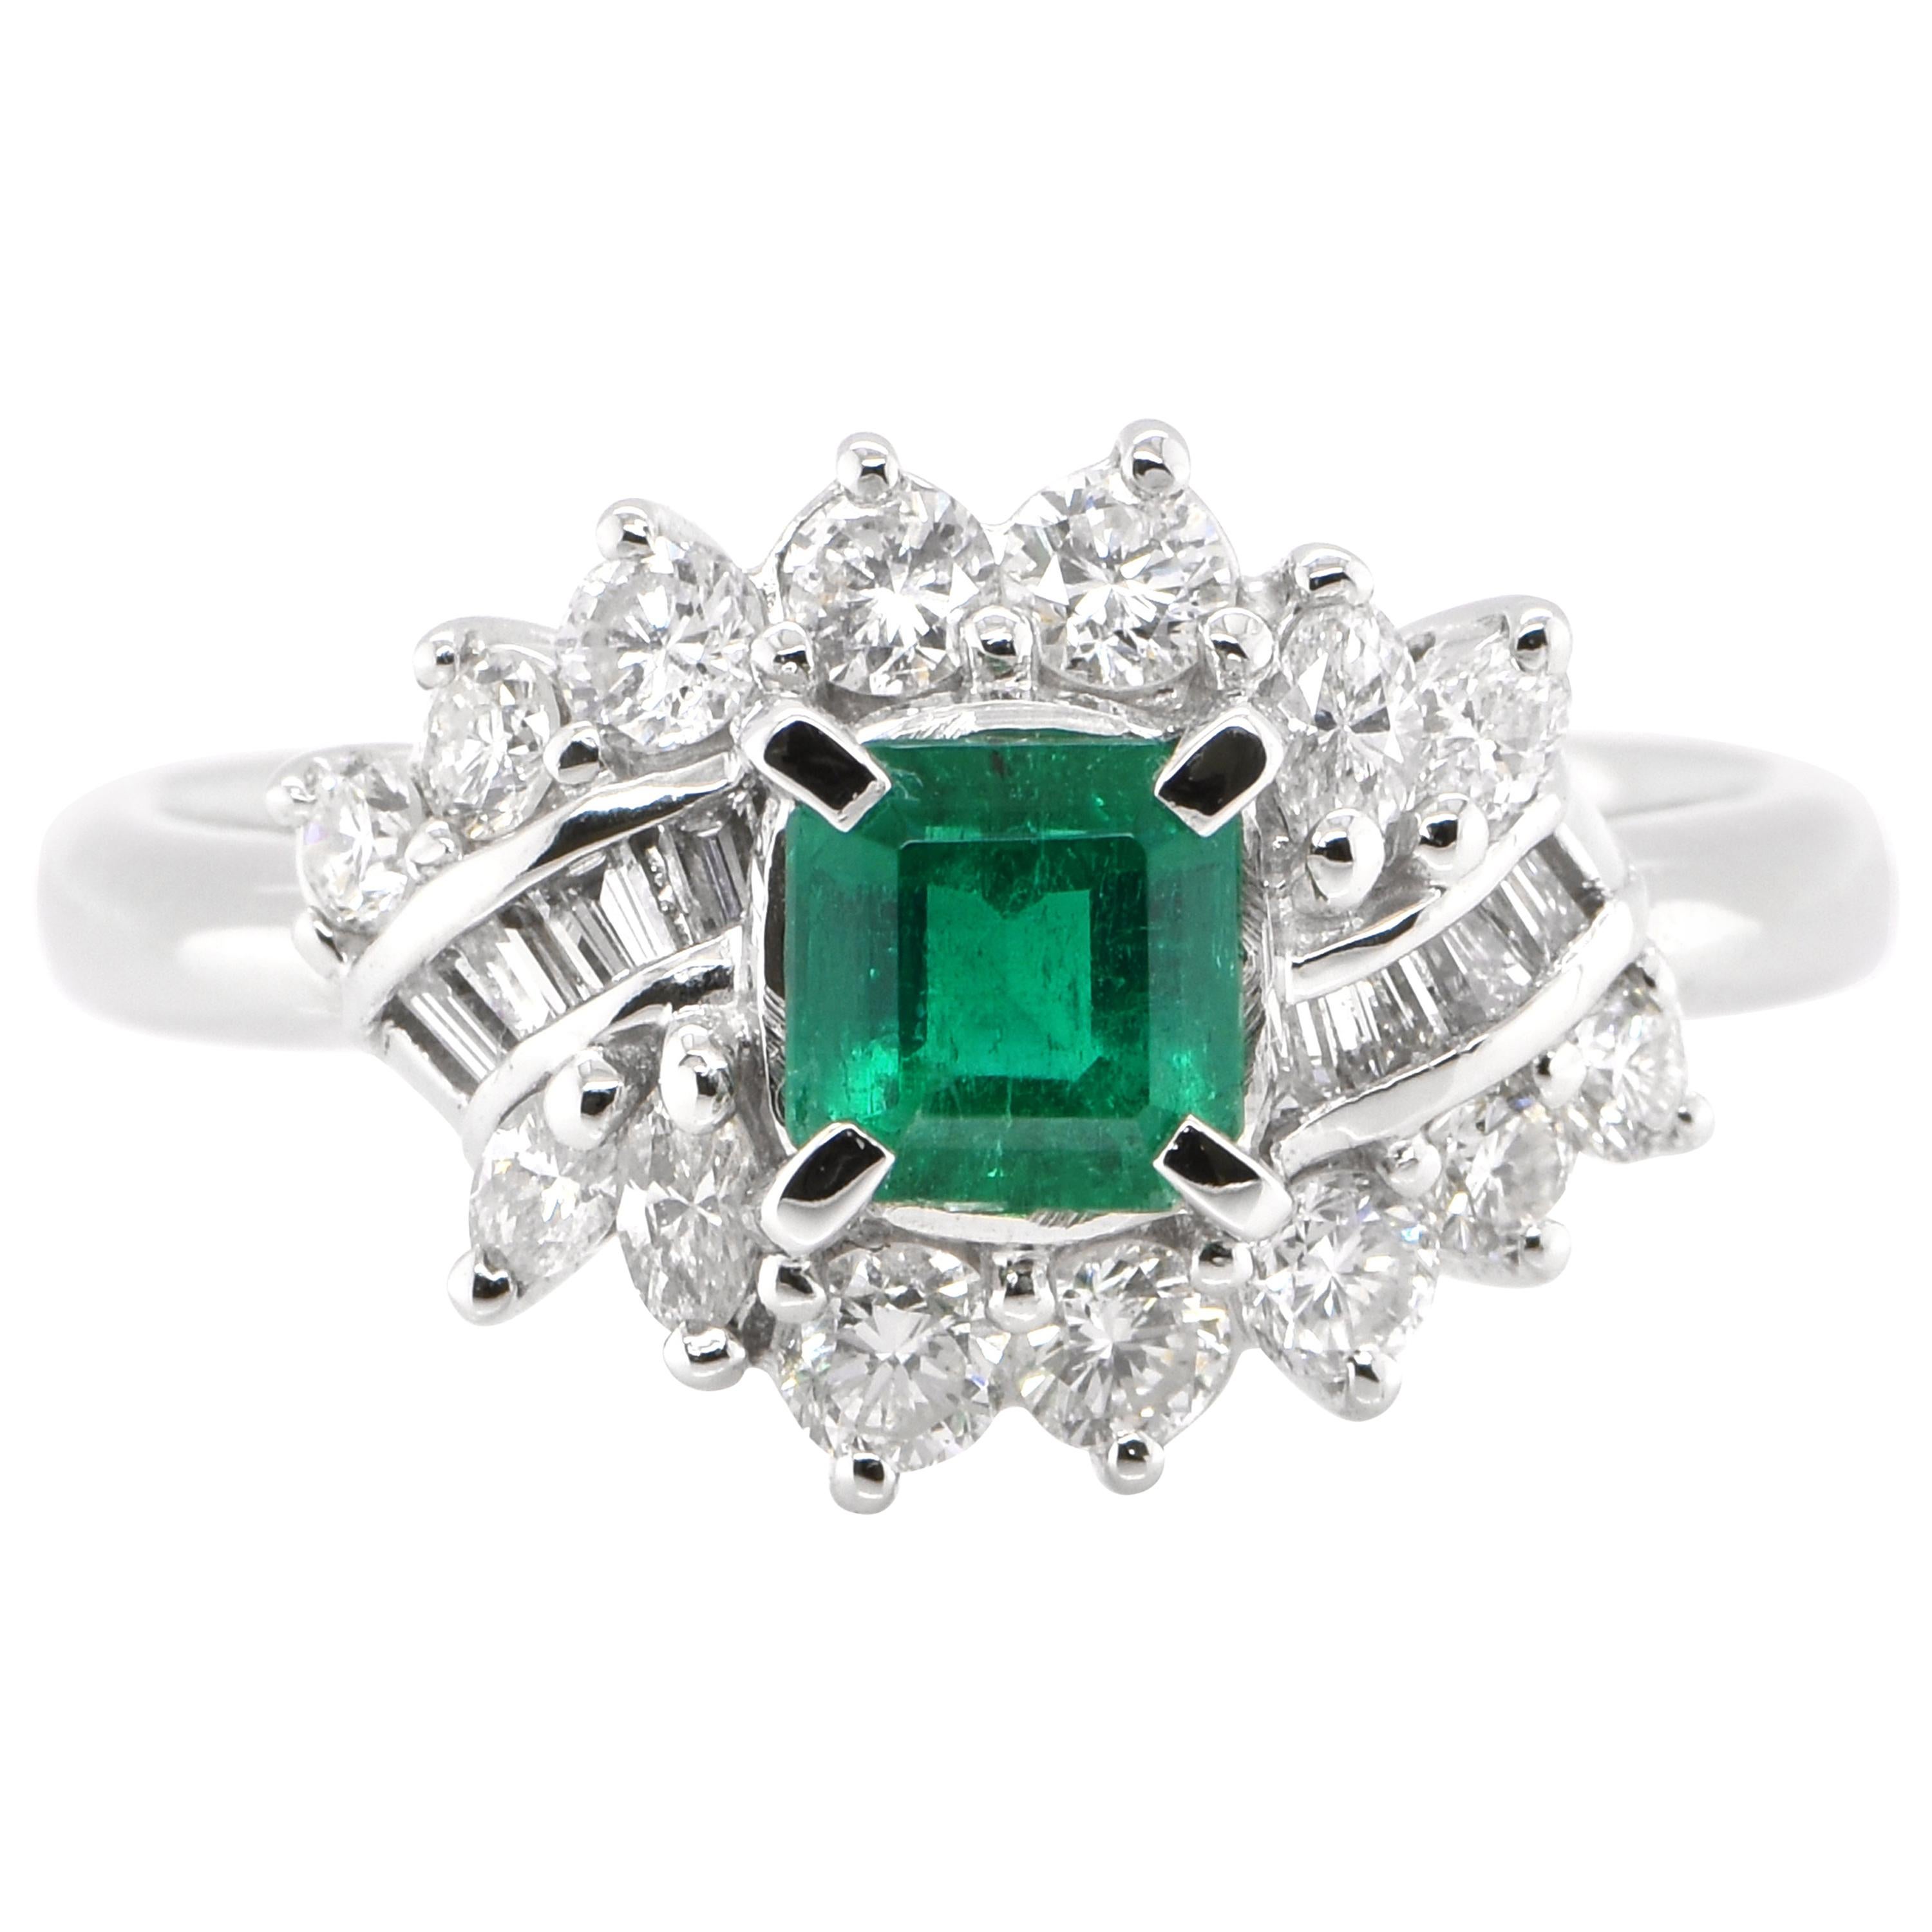 0.62 Carat Natural Emerald and Diamond Ring Set in Platinum